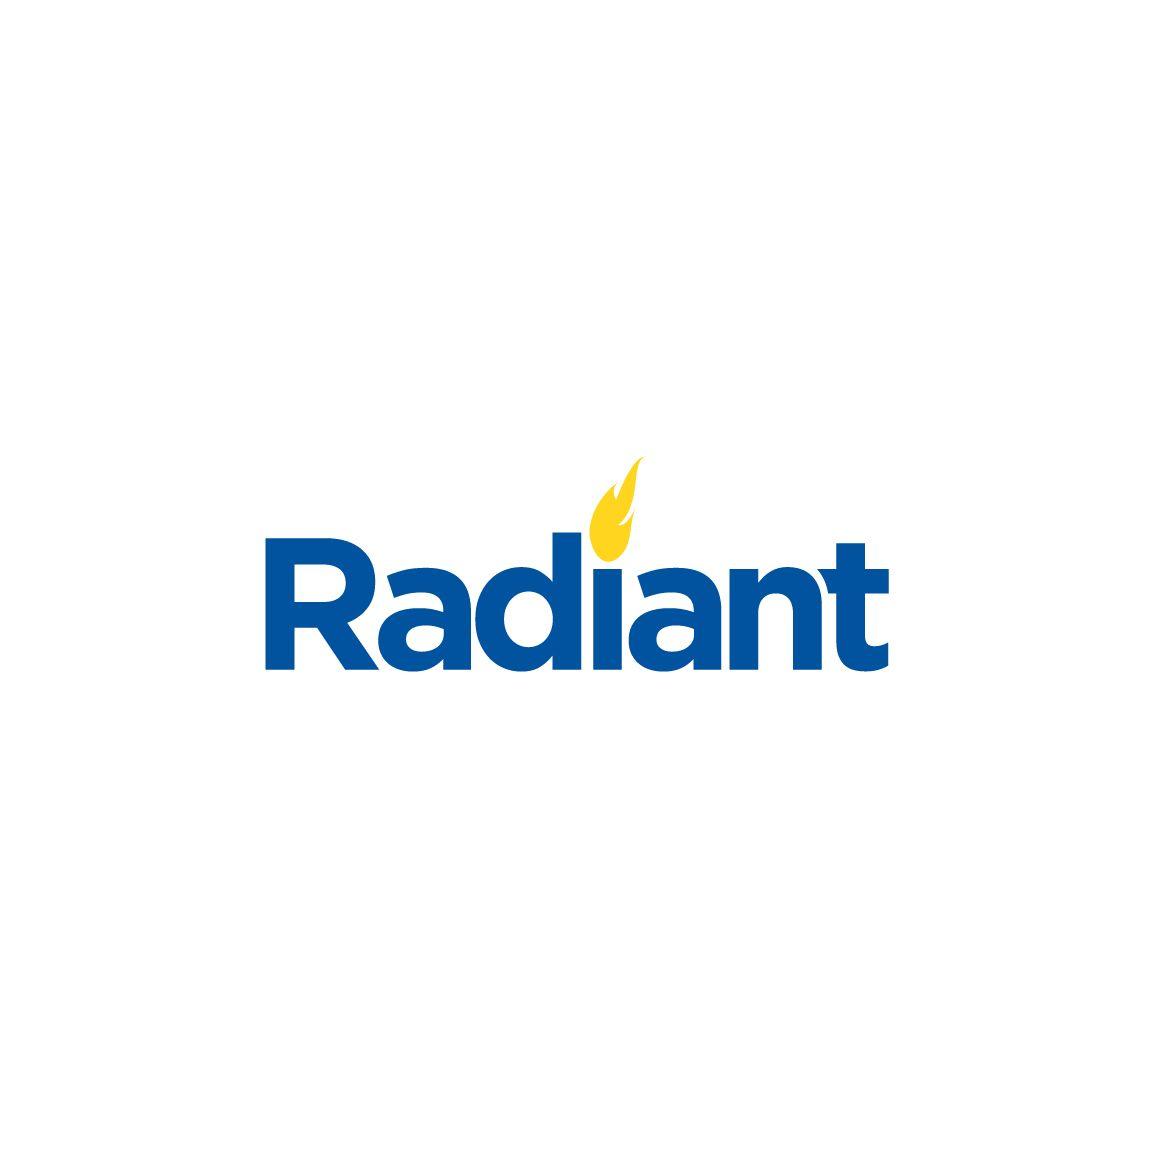 Radiant Logo - Revised Radiant Logo Logo Designs for Radiant